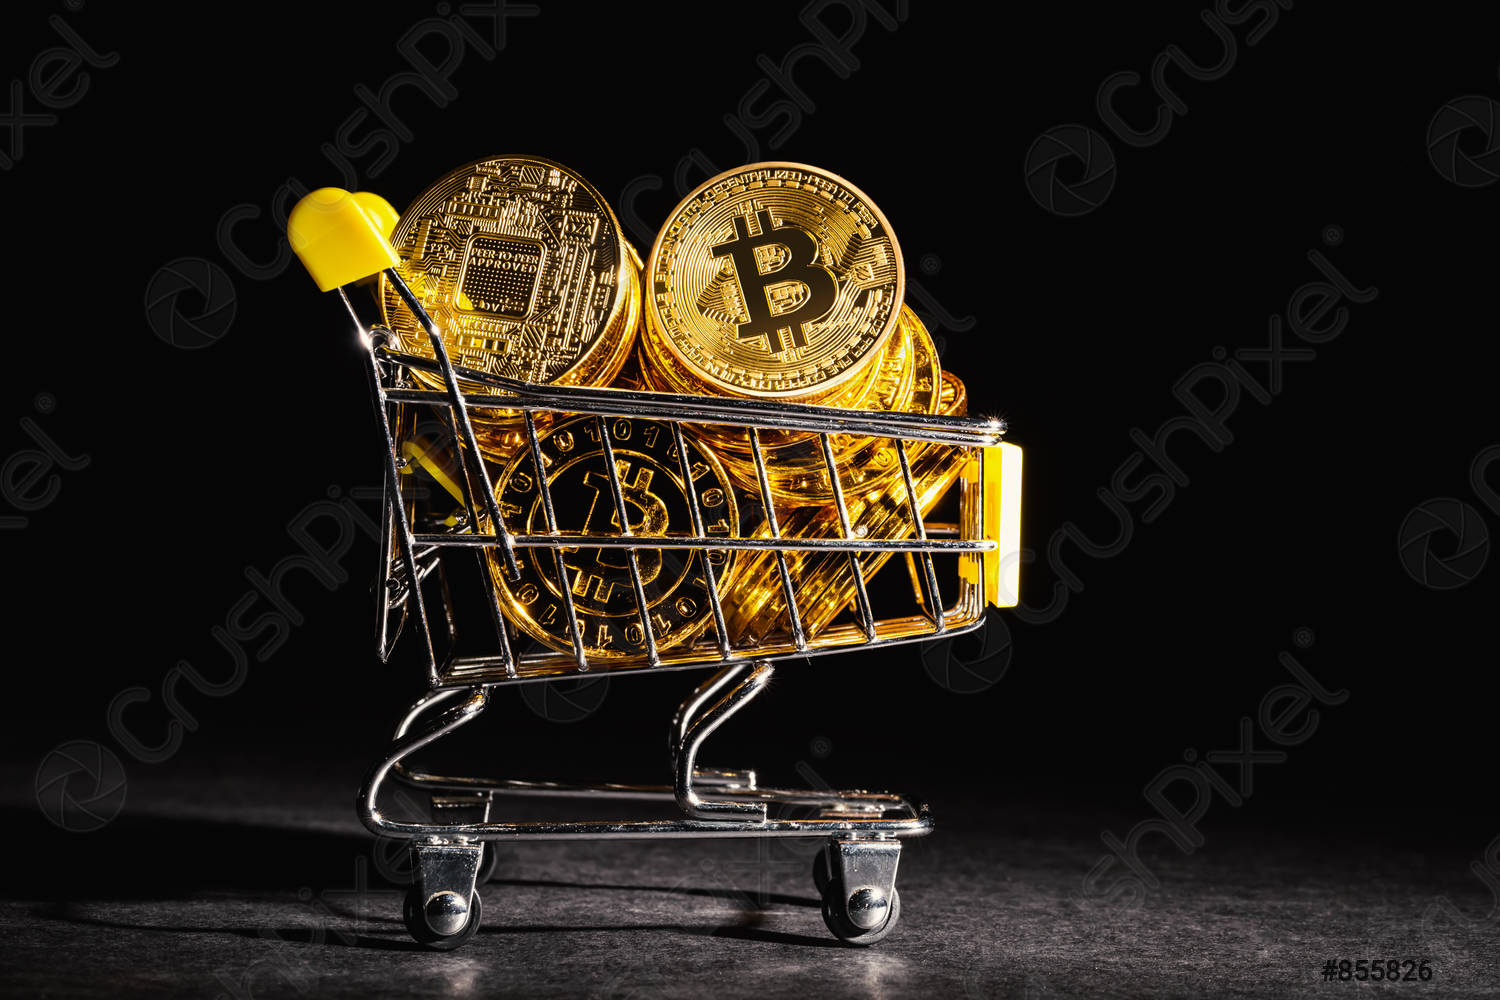 Compras de bitcoin superan US$ 6.000 millones diarios